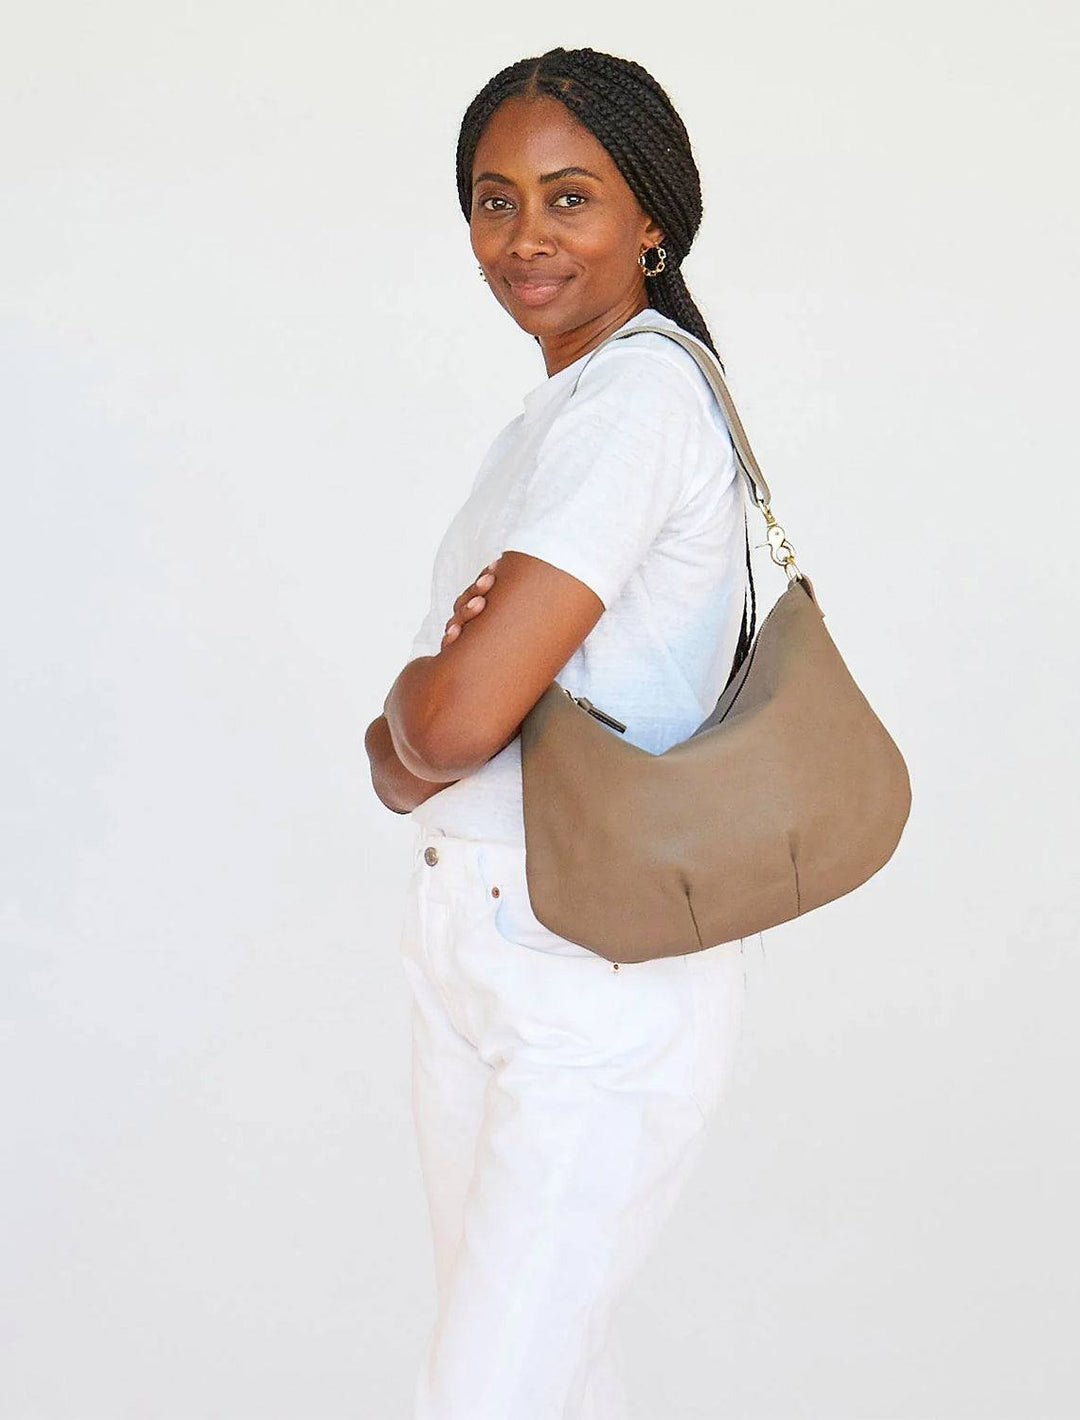 Petit Moyen Messenger Bag by Clare V. for $20